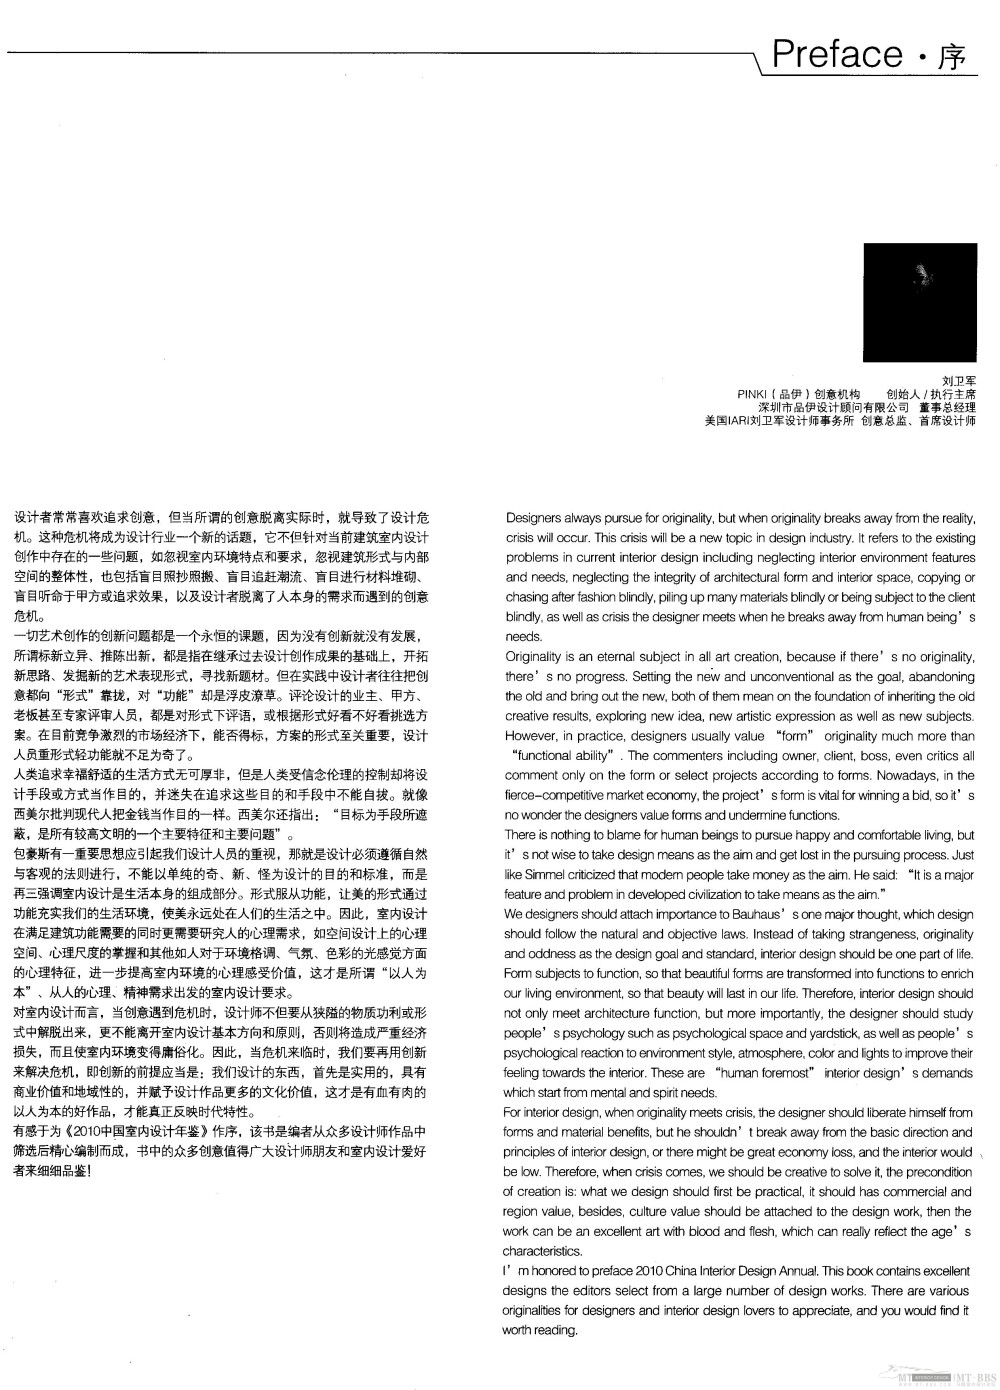 2010 China Interior Design Annual 2010中国室内设计年鉴 -2(上传中）_13671144854 0001.JPG